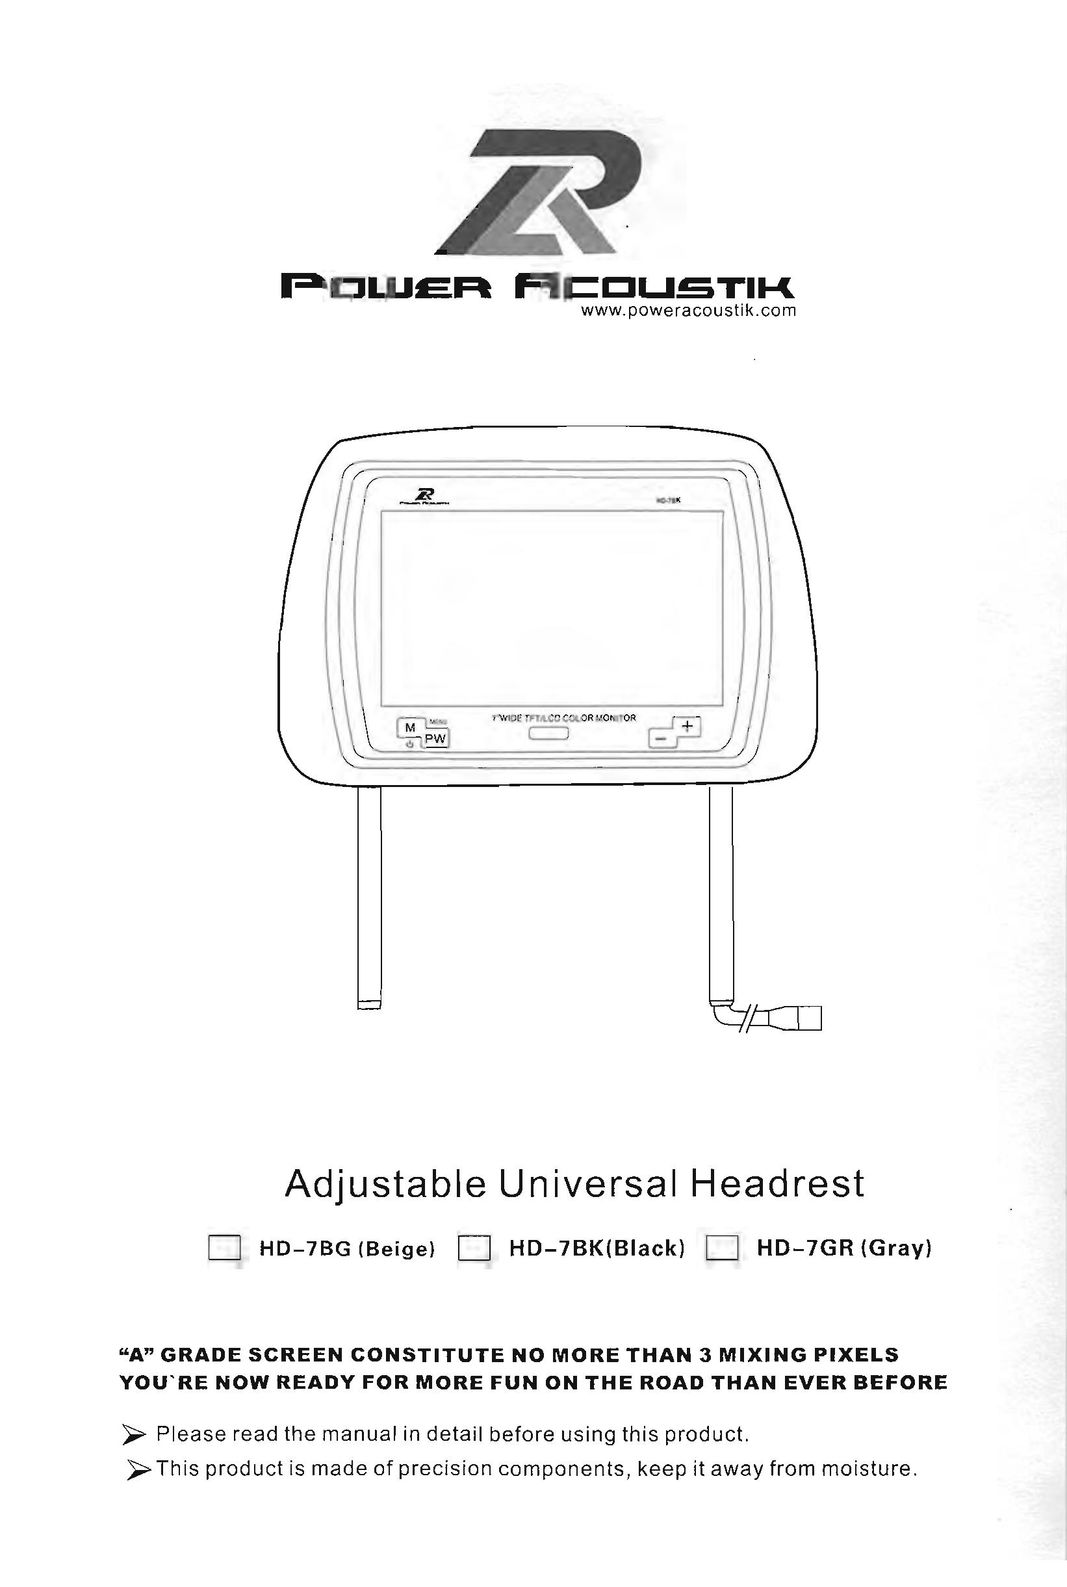 Power Acoustik HD-7BK Car Video System User Manual